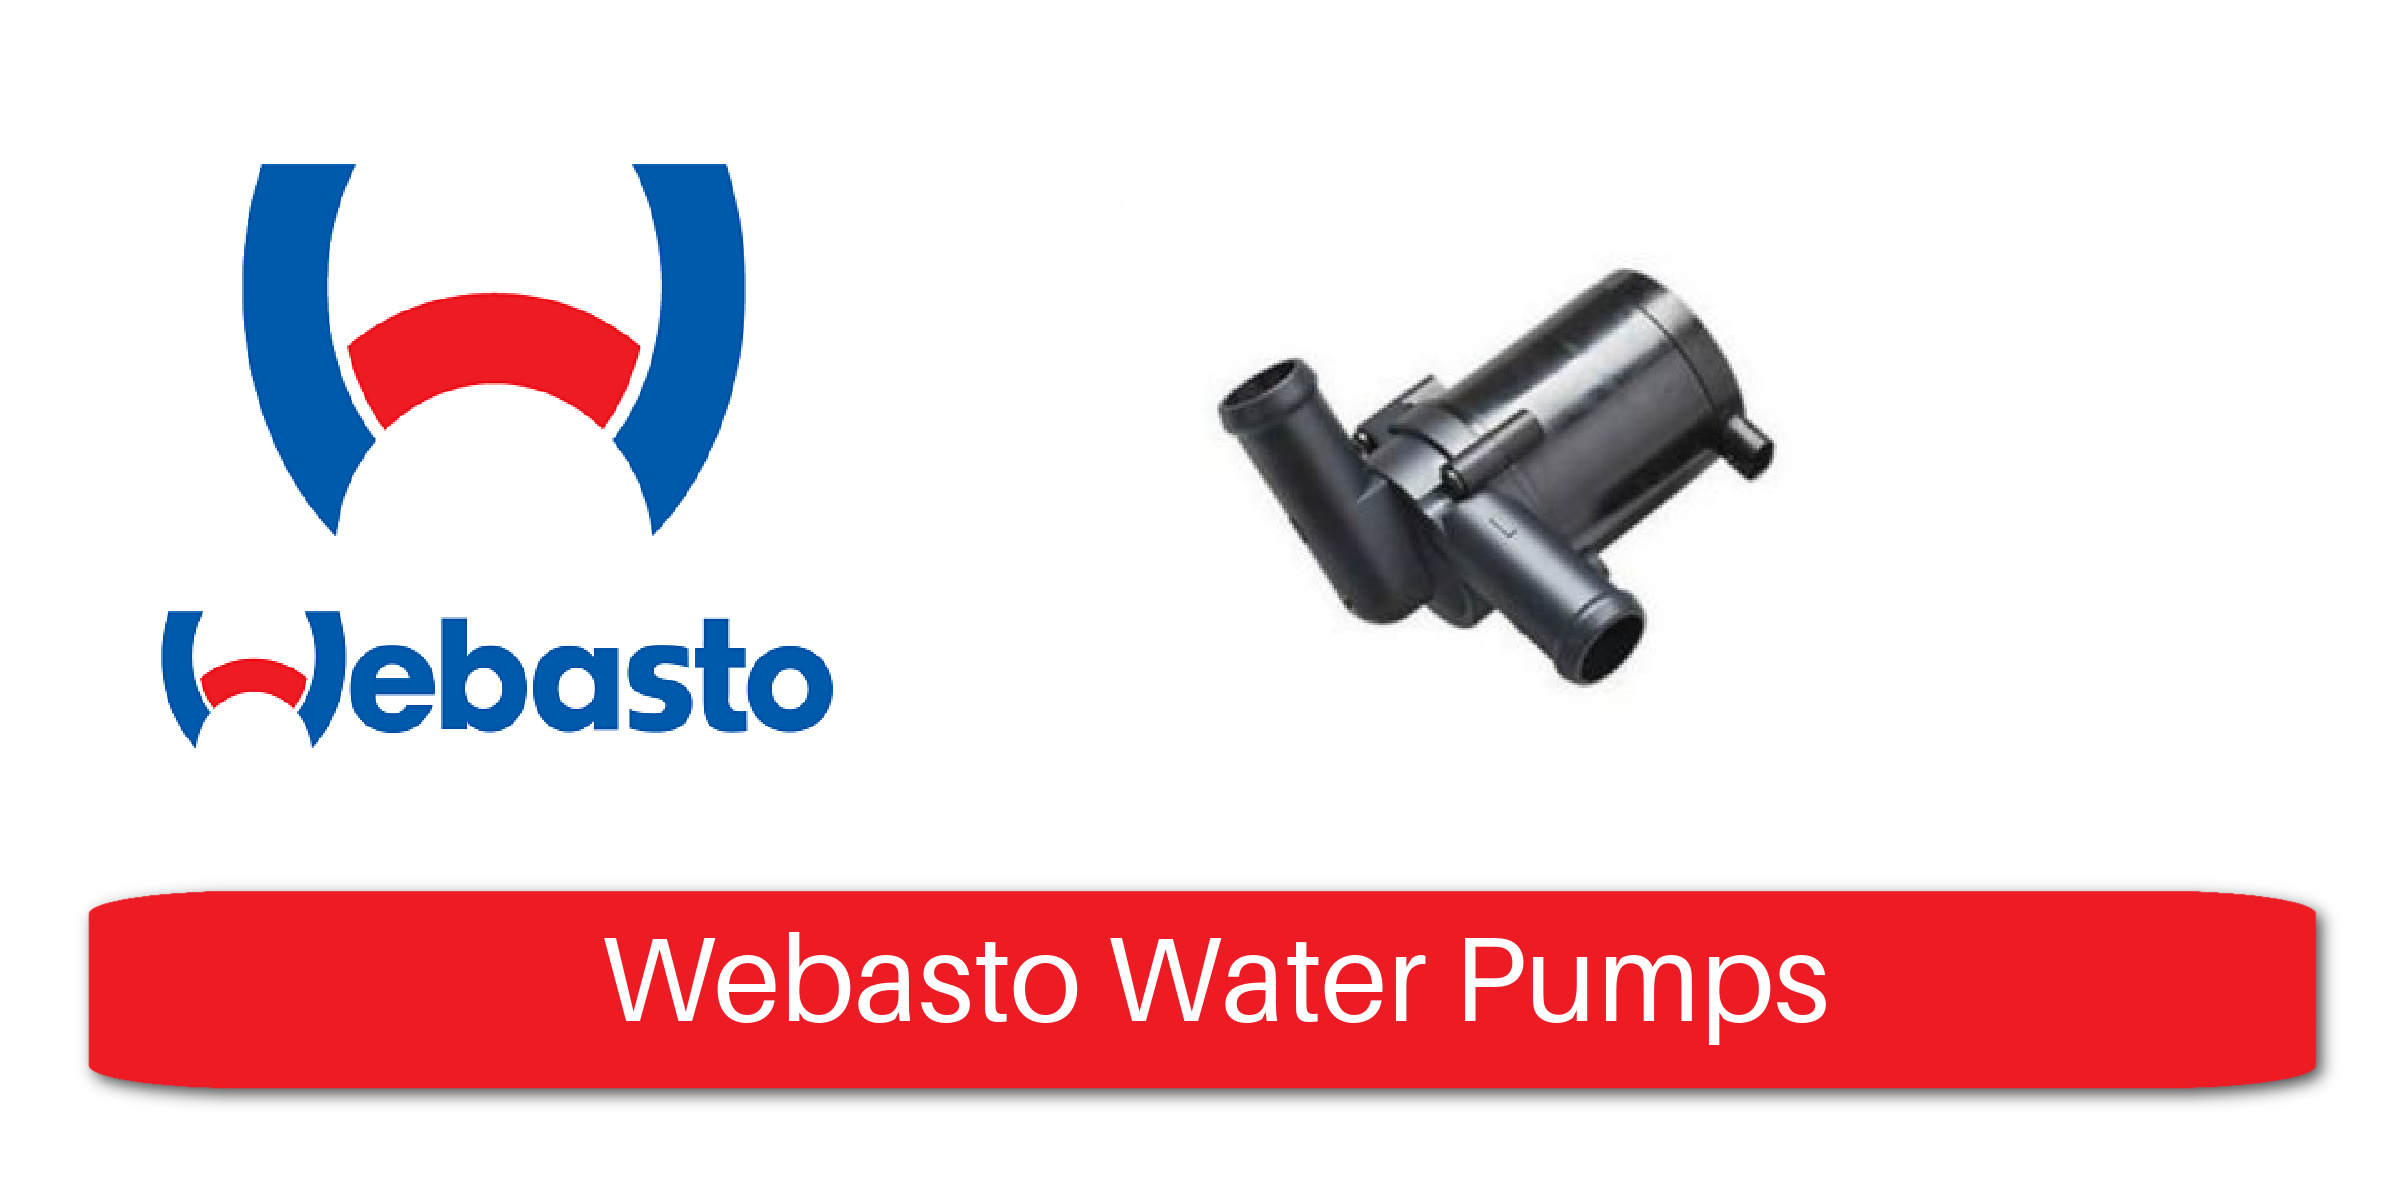 Webasto Water Pumps